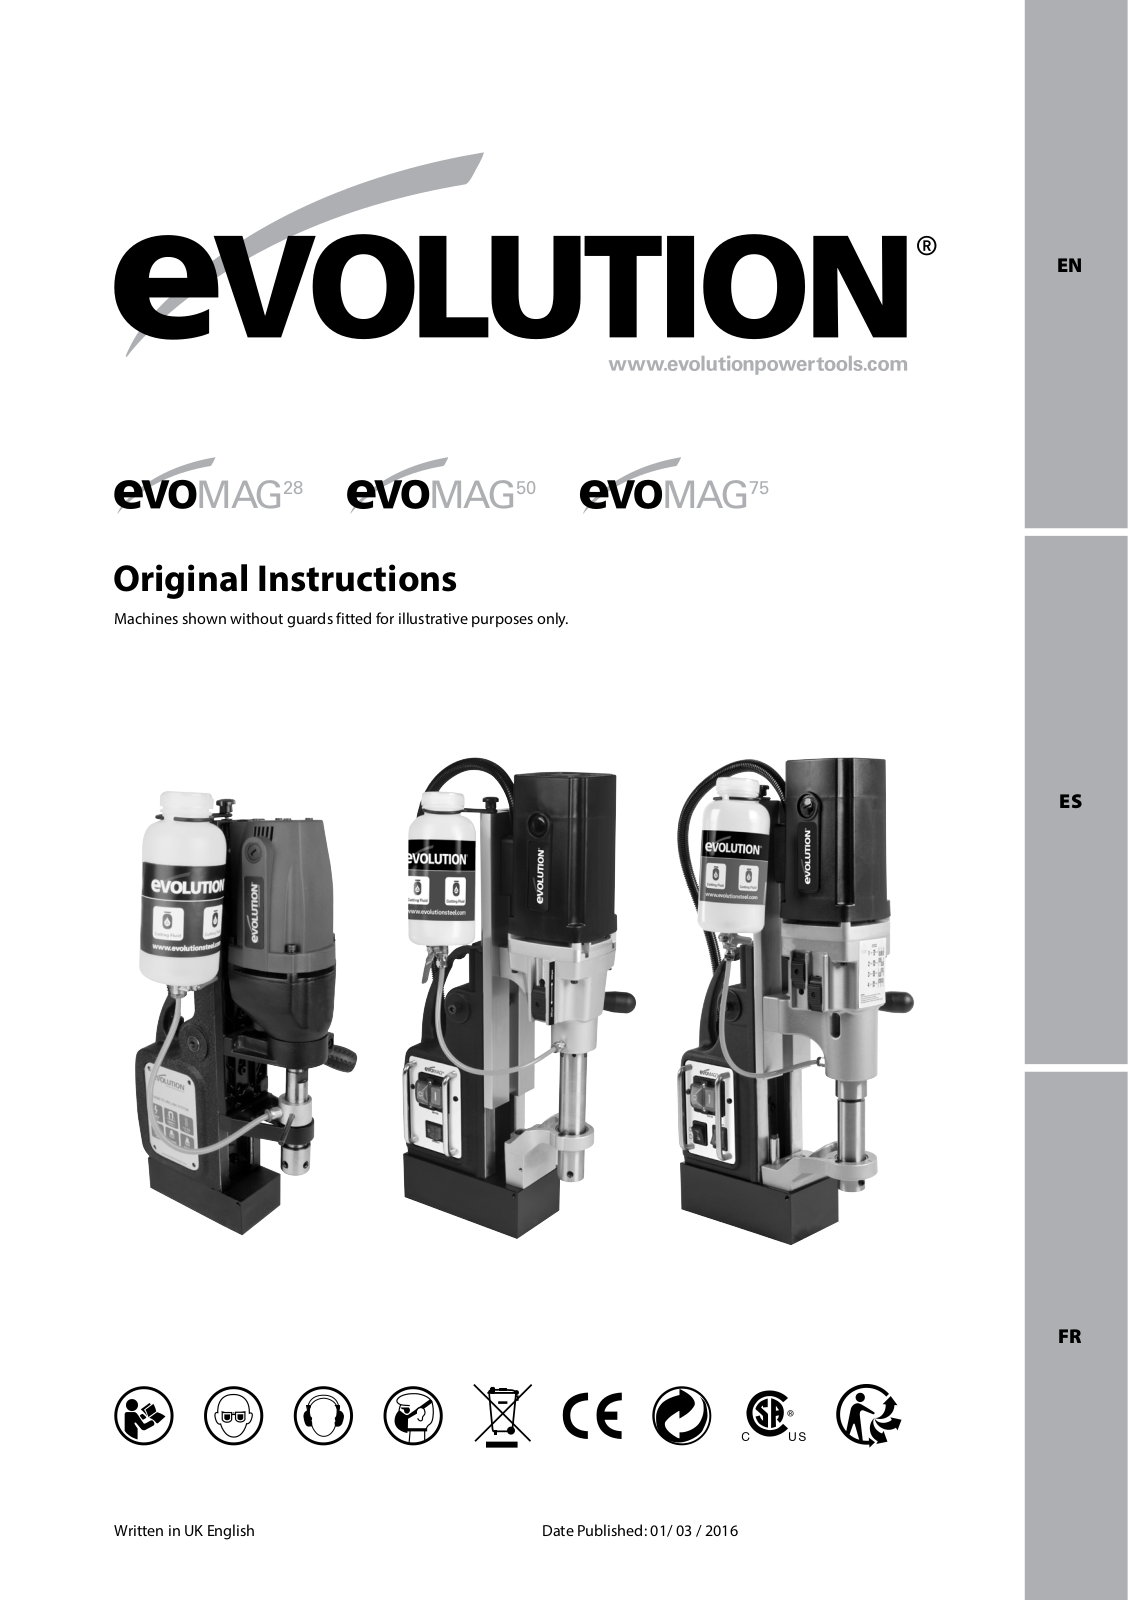 Evolution EVOMAG50, EVOMAG75, EVOMAG28 User Manual